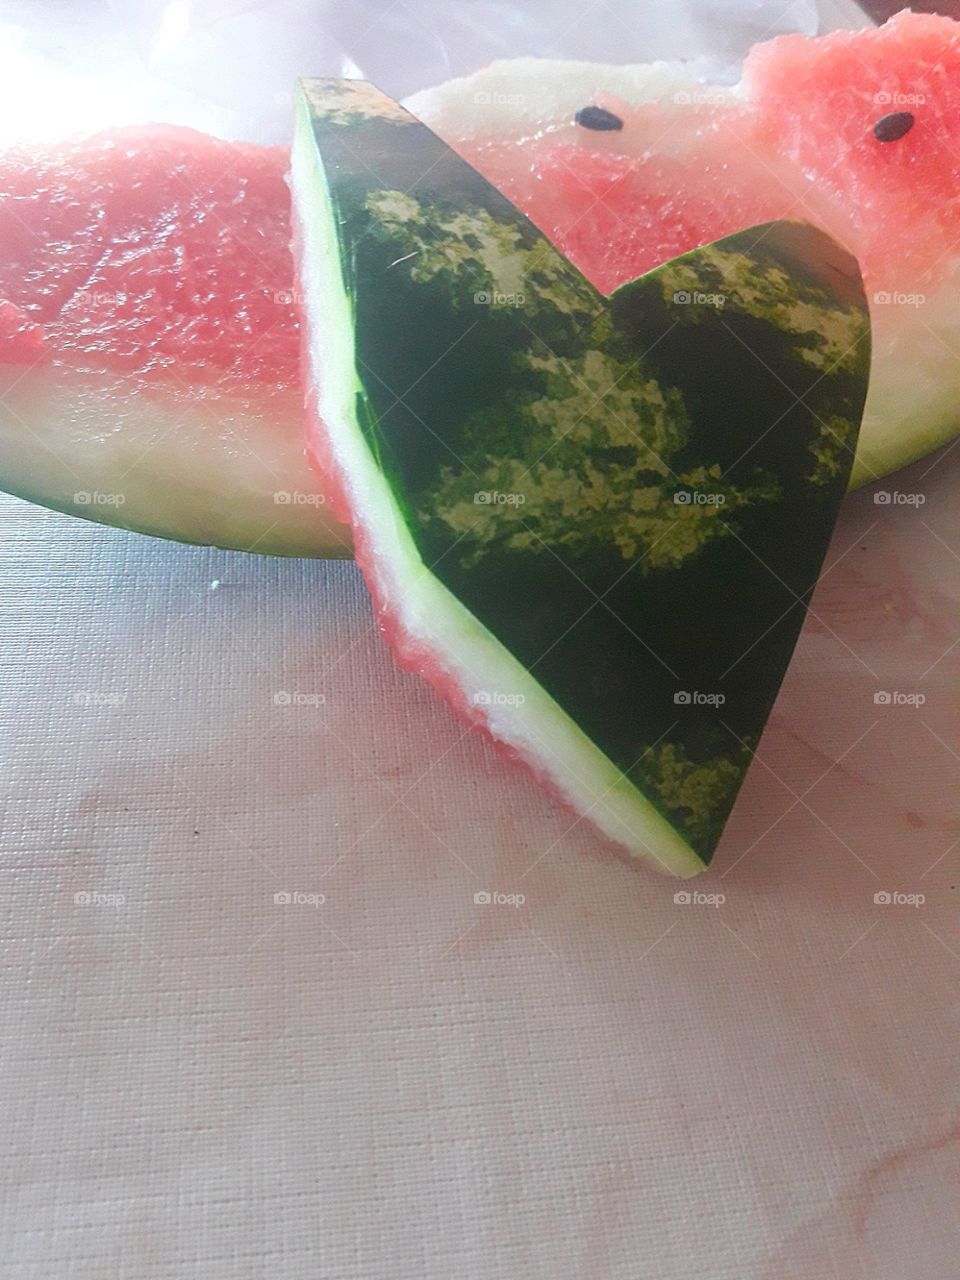 watermelon leaf heart